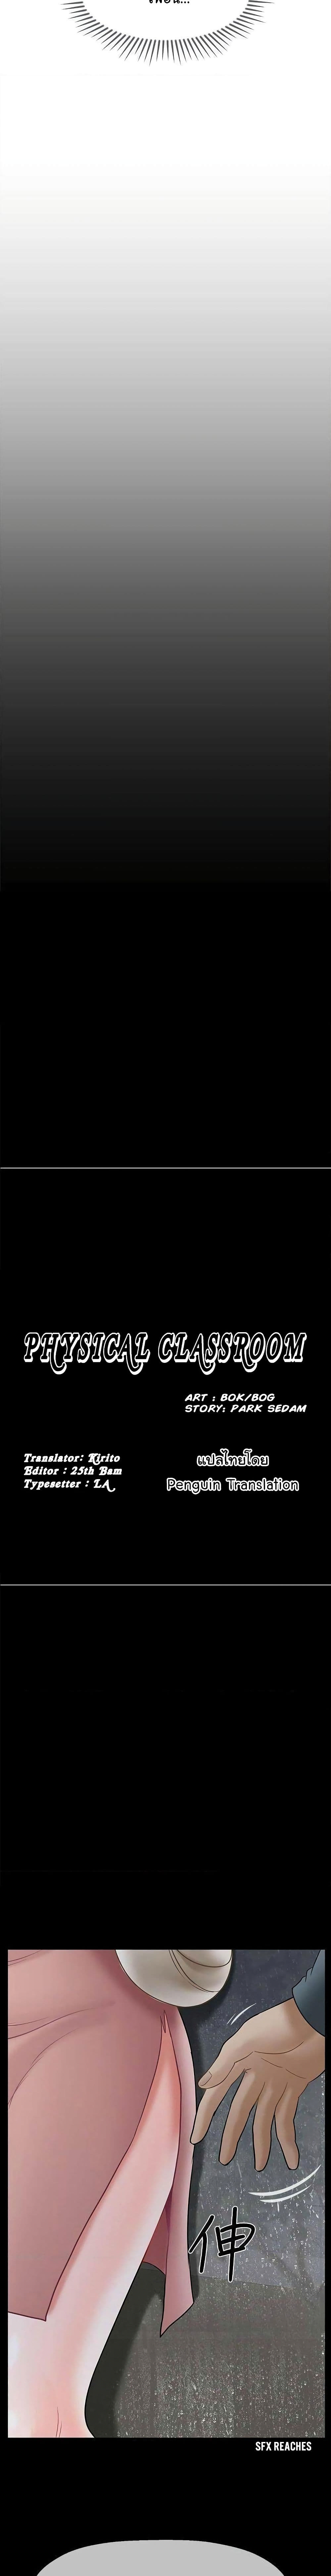 A Physical Classroom 29 12